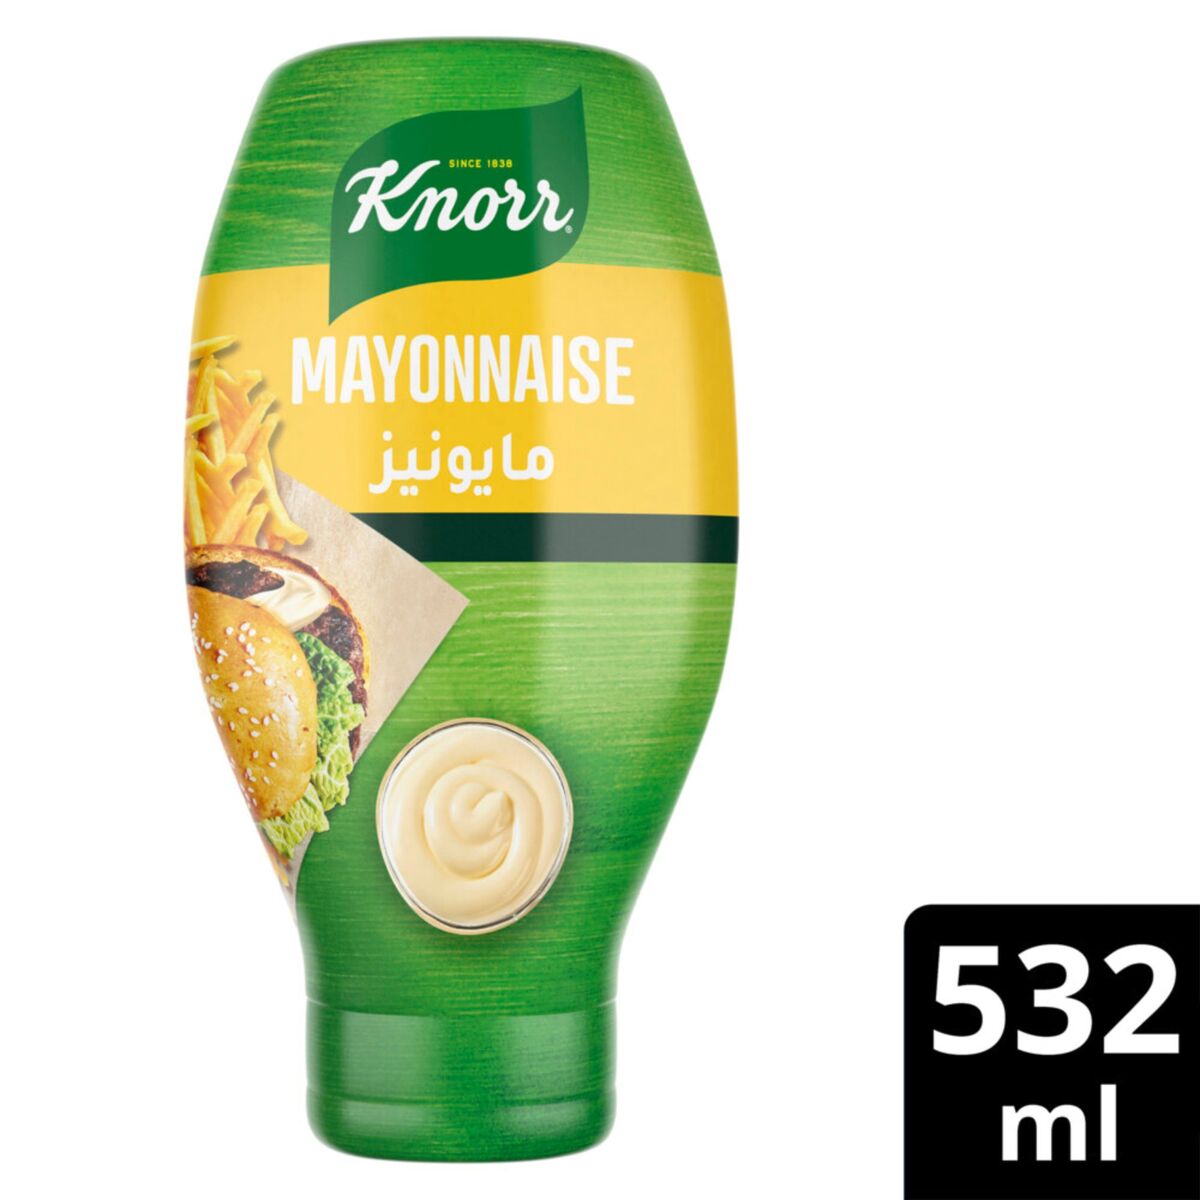 Knorr Original Mayonnaise 532 ml